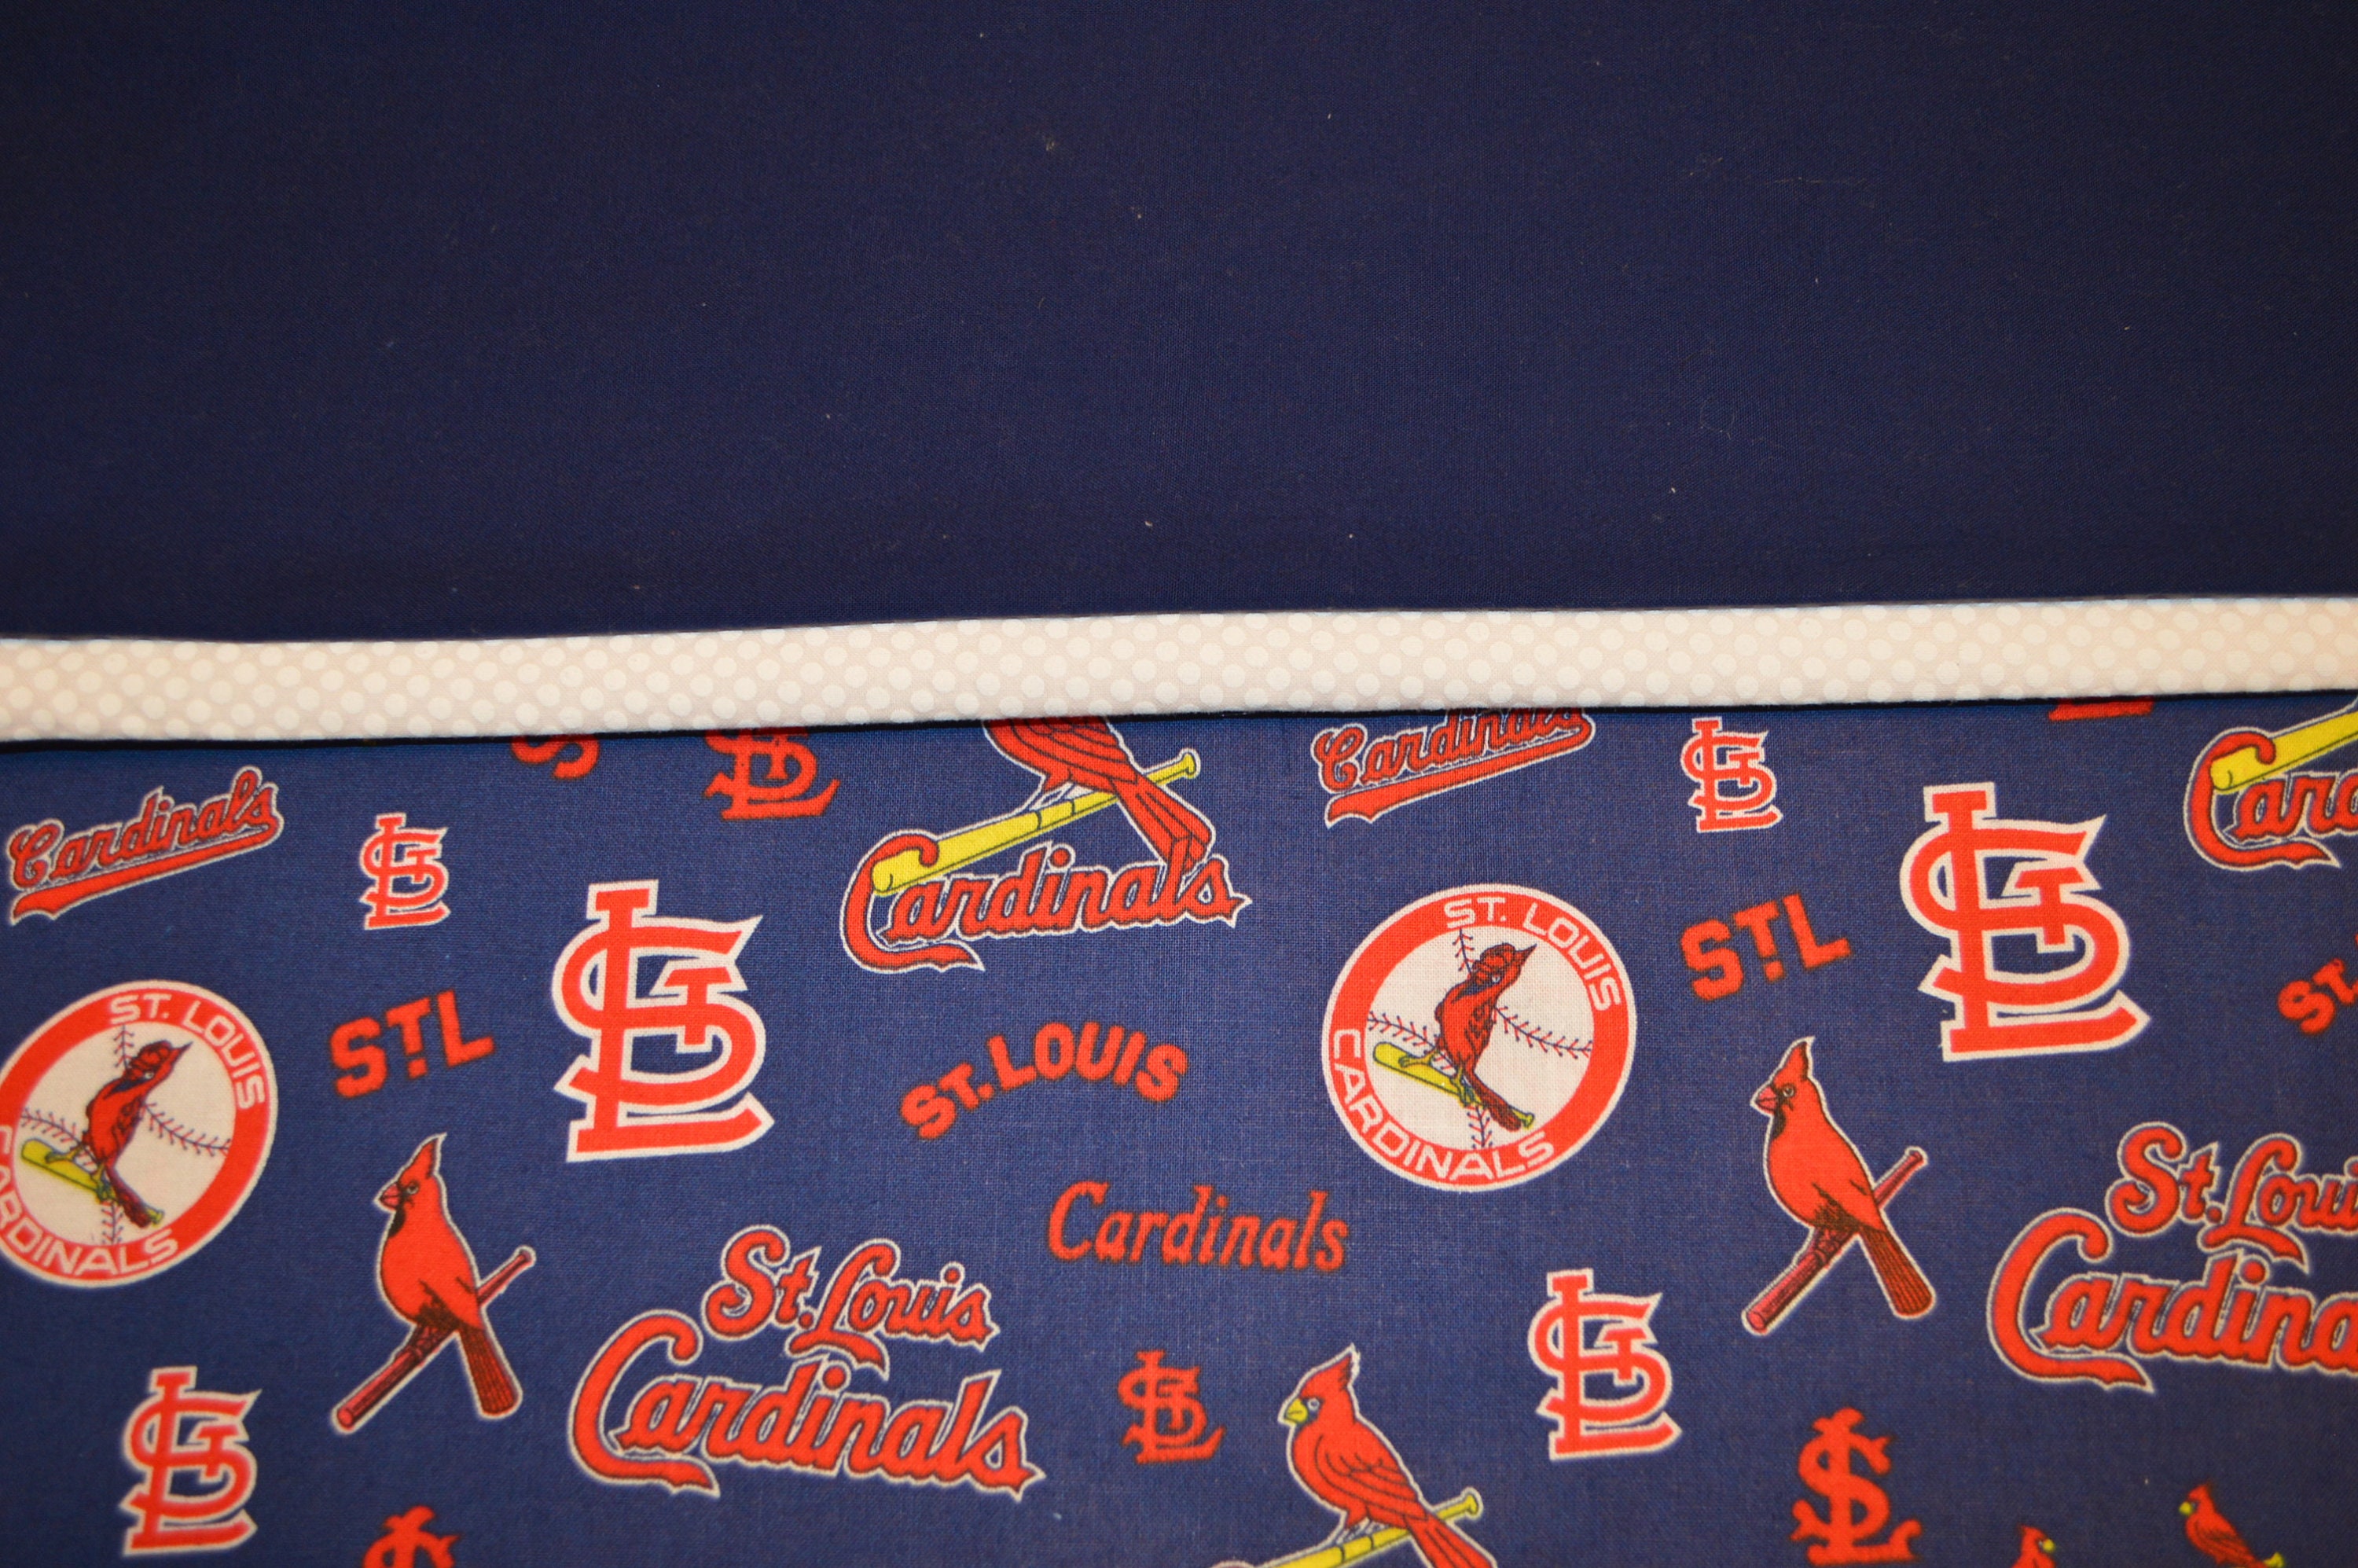 St. Louis Cardinals cotton fabric 18” x 21” fat quarter